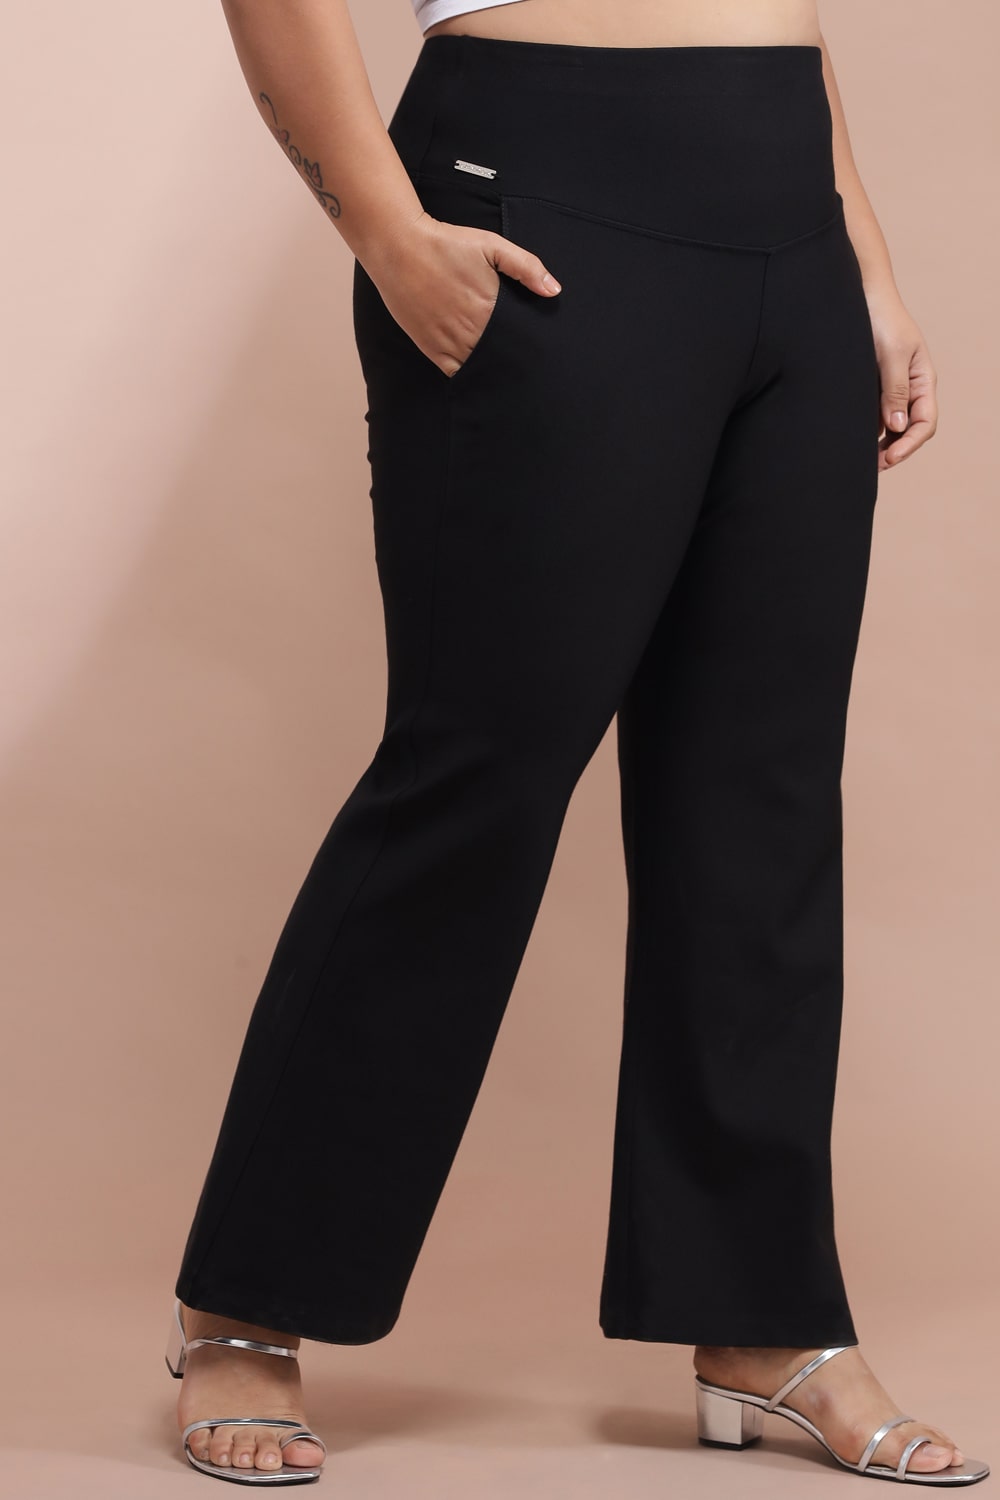 Blibea Bell Bottom Jeans for Women Plus Size Front Seam Black Flare Pants  Wide Leg Denim Pants 16 